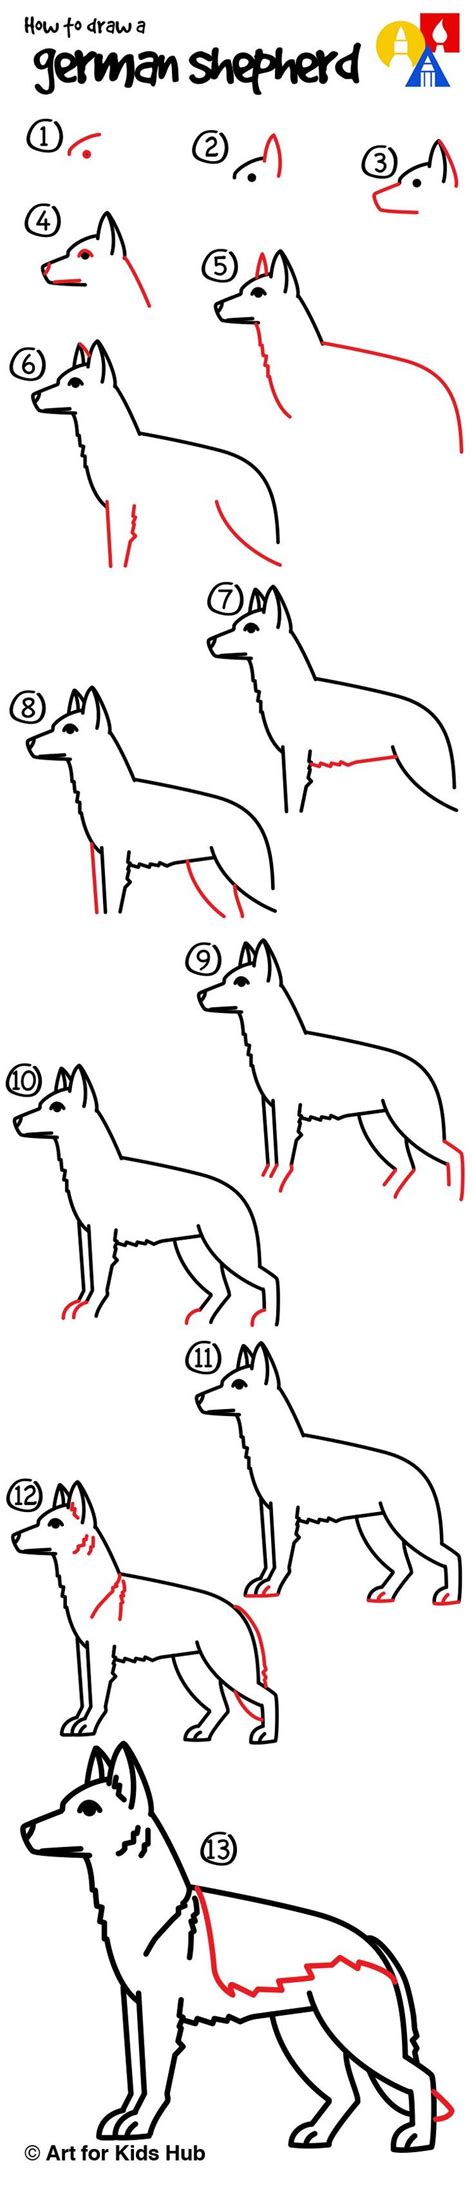 How To Draw A German Shepherd Art For Kids Hub Art For Kids Hub